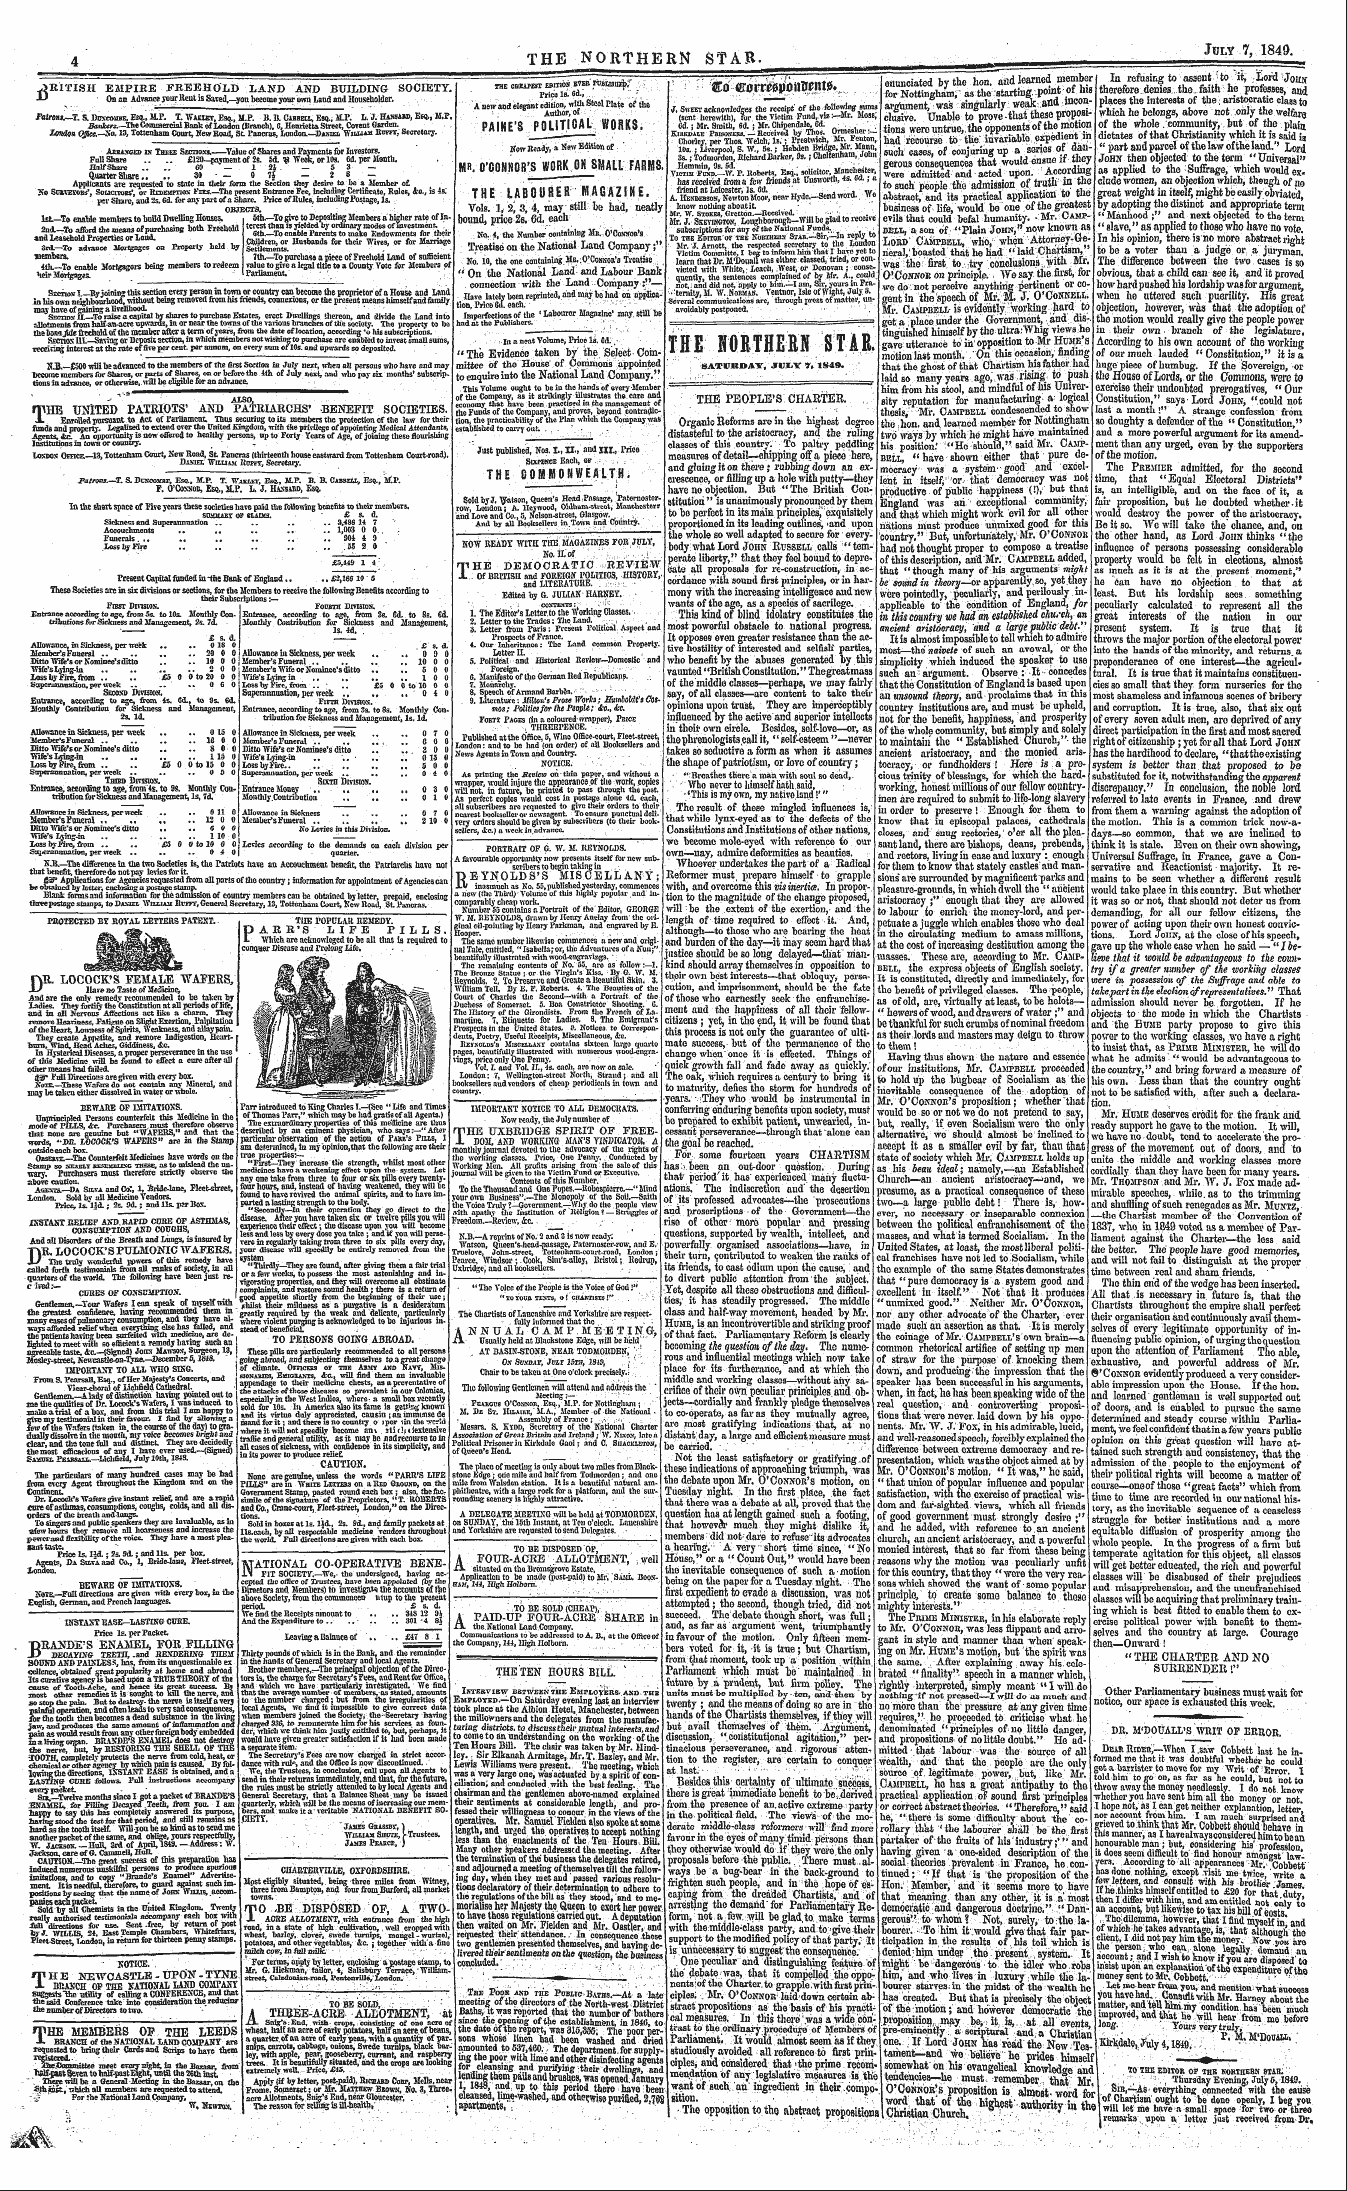 Northern Star (1837-1852): jS F Y, 3rd edition - Ad00432